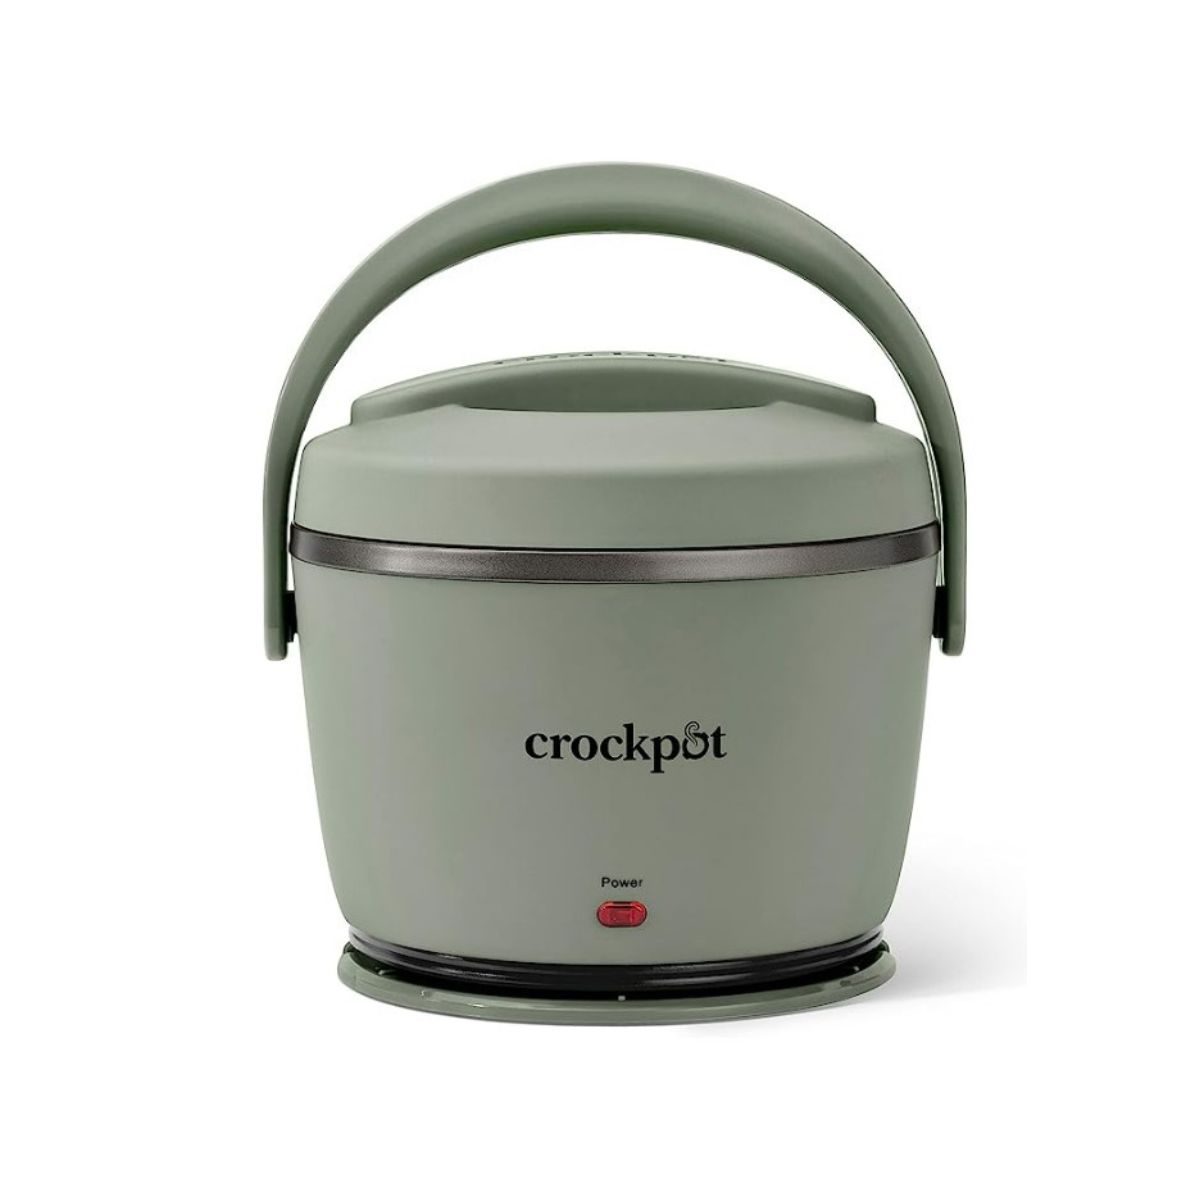 Green crockpot electric lunch box.